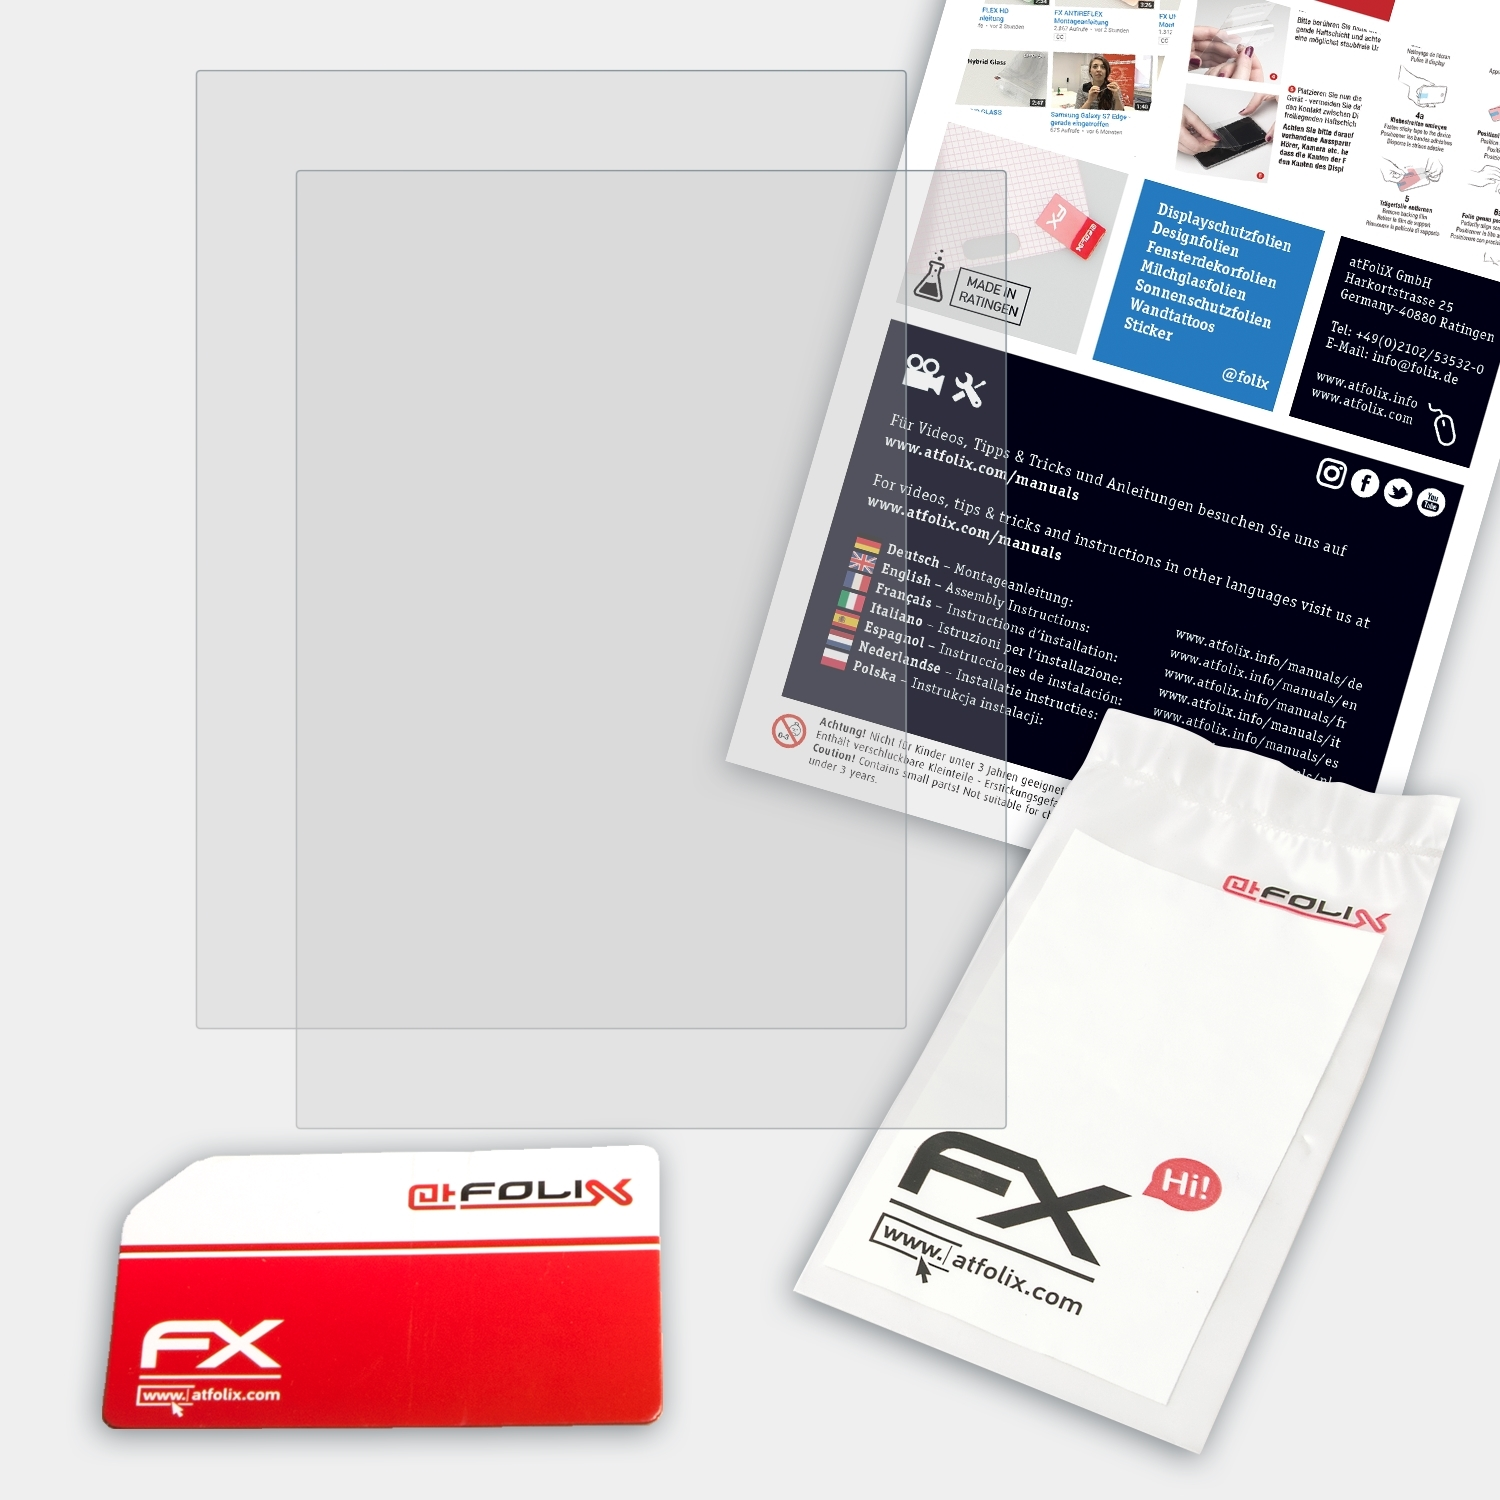 ATFOLIX 2x FX-Antireflex 3G)) Keyboard (WiFi Kindle Amazon & Displayschutz(für